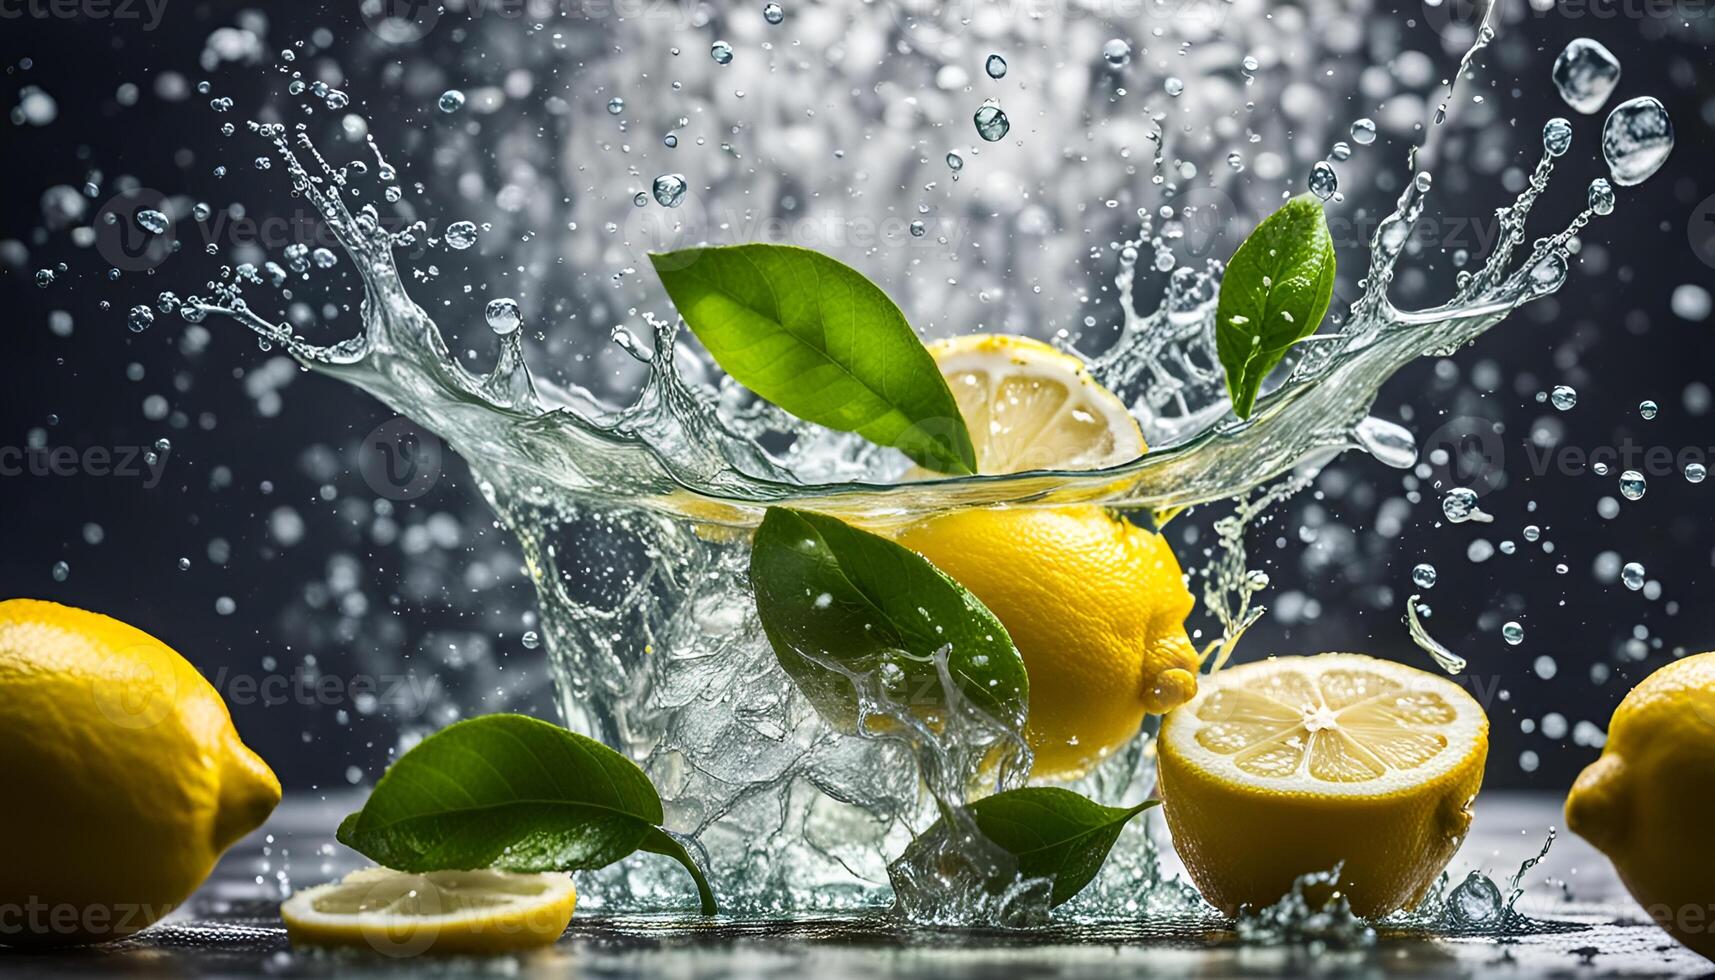 AI generated Water splashing on lemons and green tea leaf photo